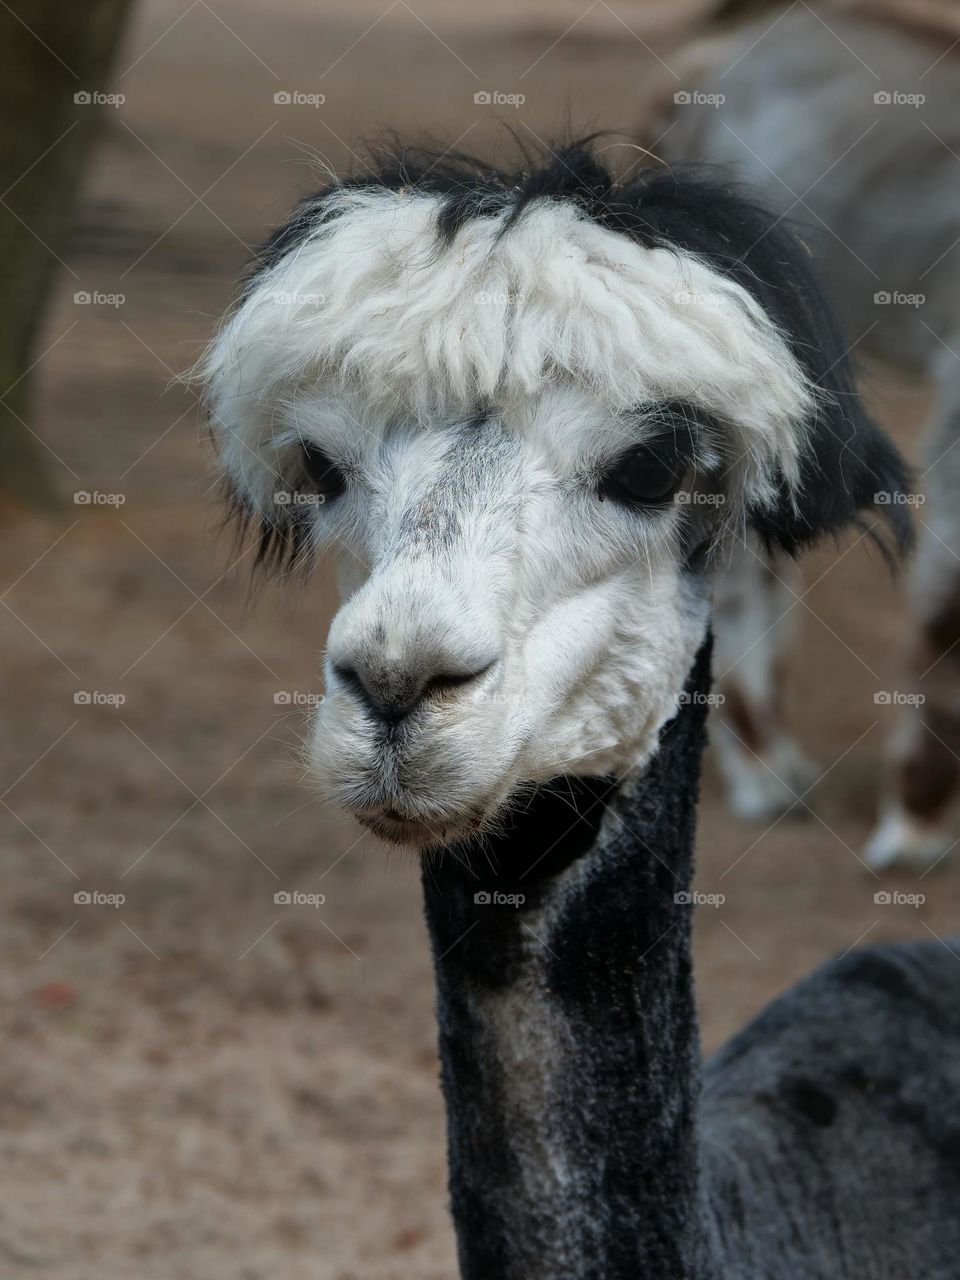 White face alpaca